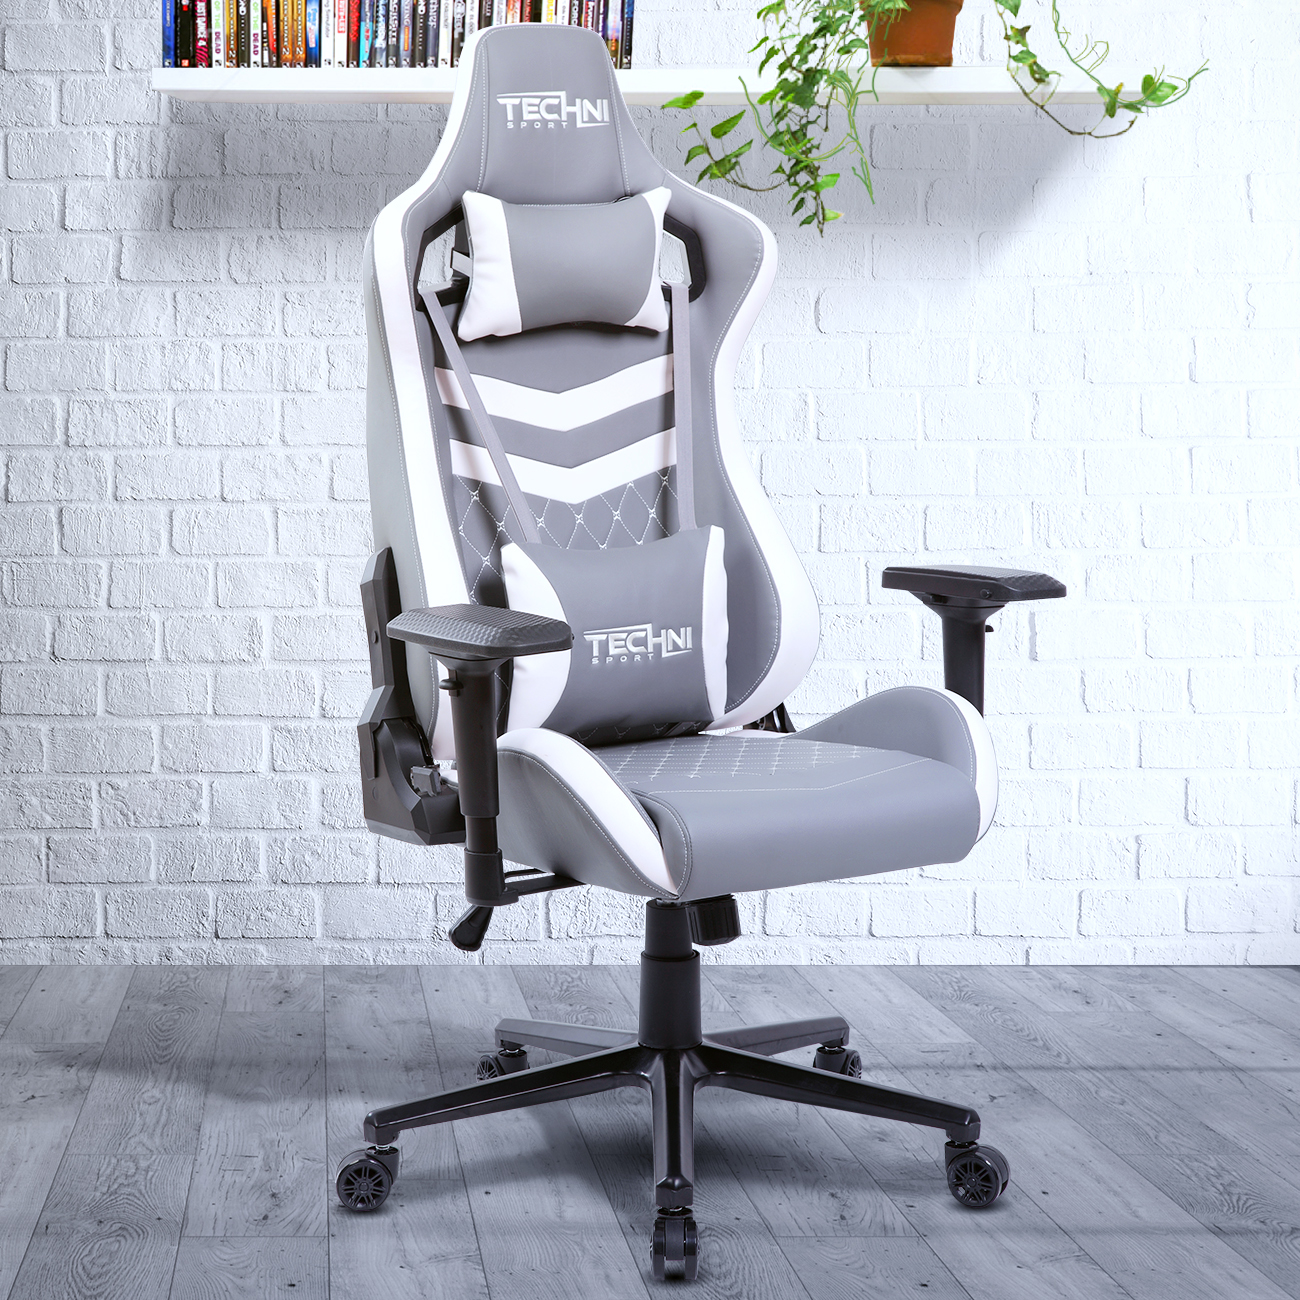 Techni Sport TS-83 Ergonomic High Back Racer Style PC Gaming Chair, Grey/White-CASAINC